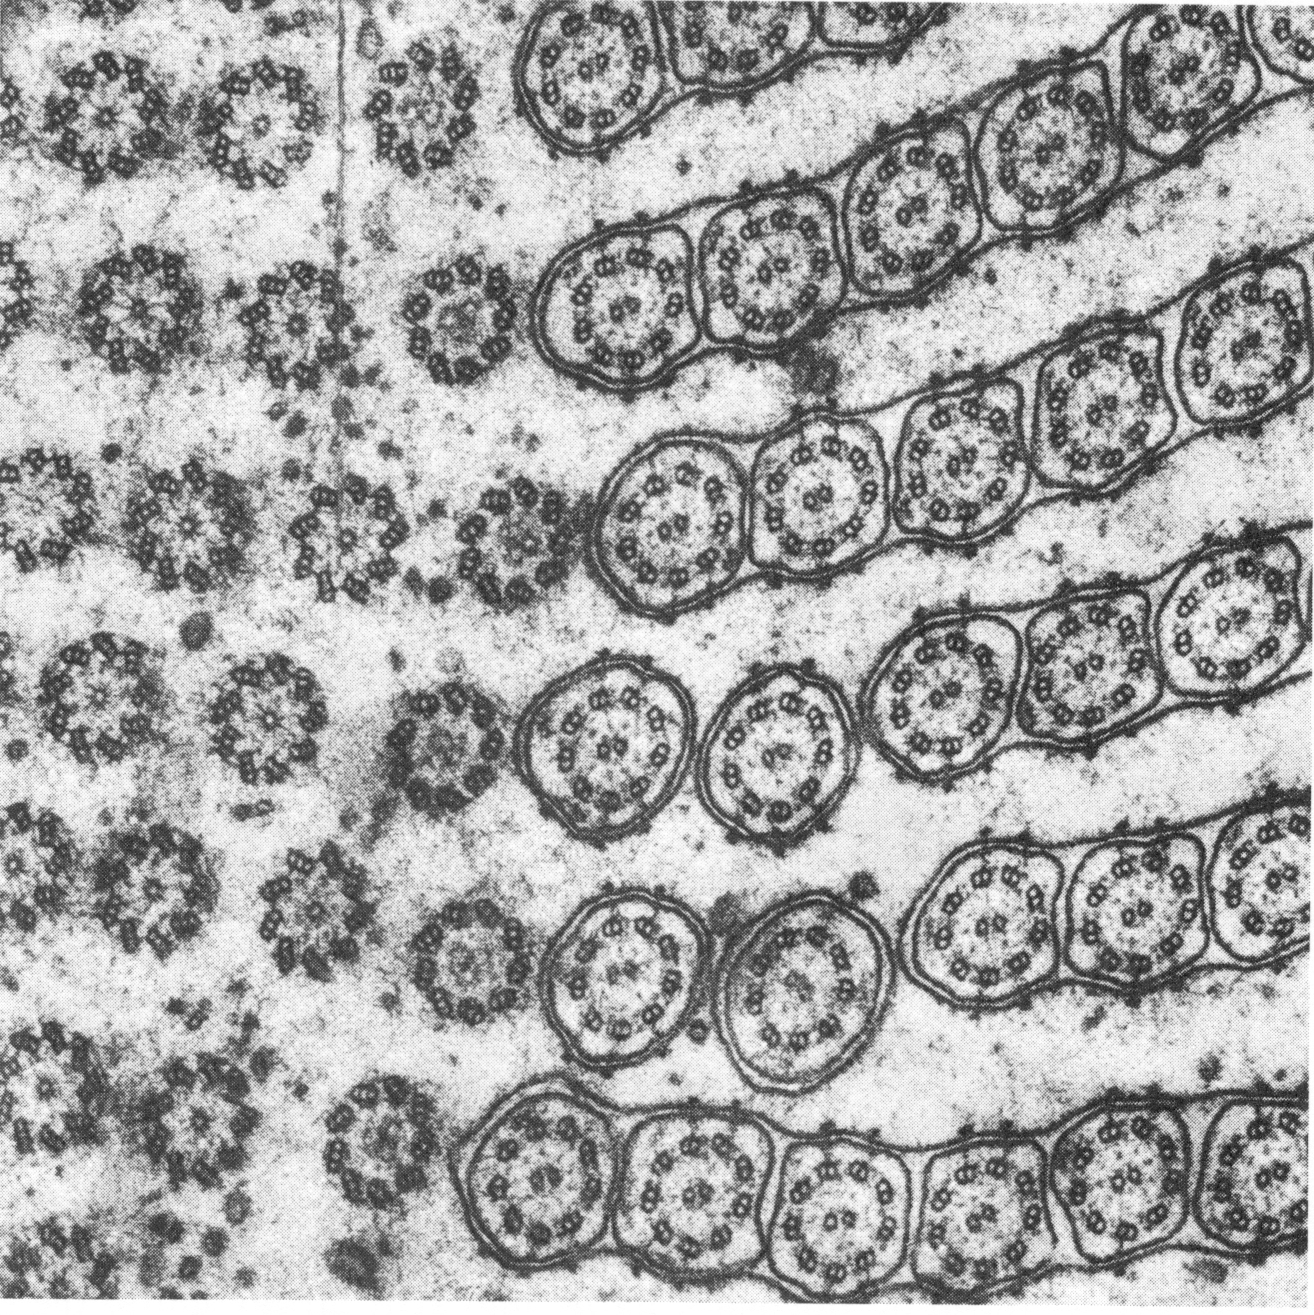 Photograph: cross-section of a ciliate protozoan